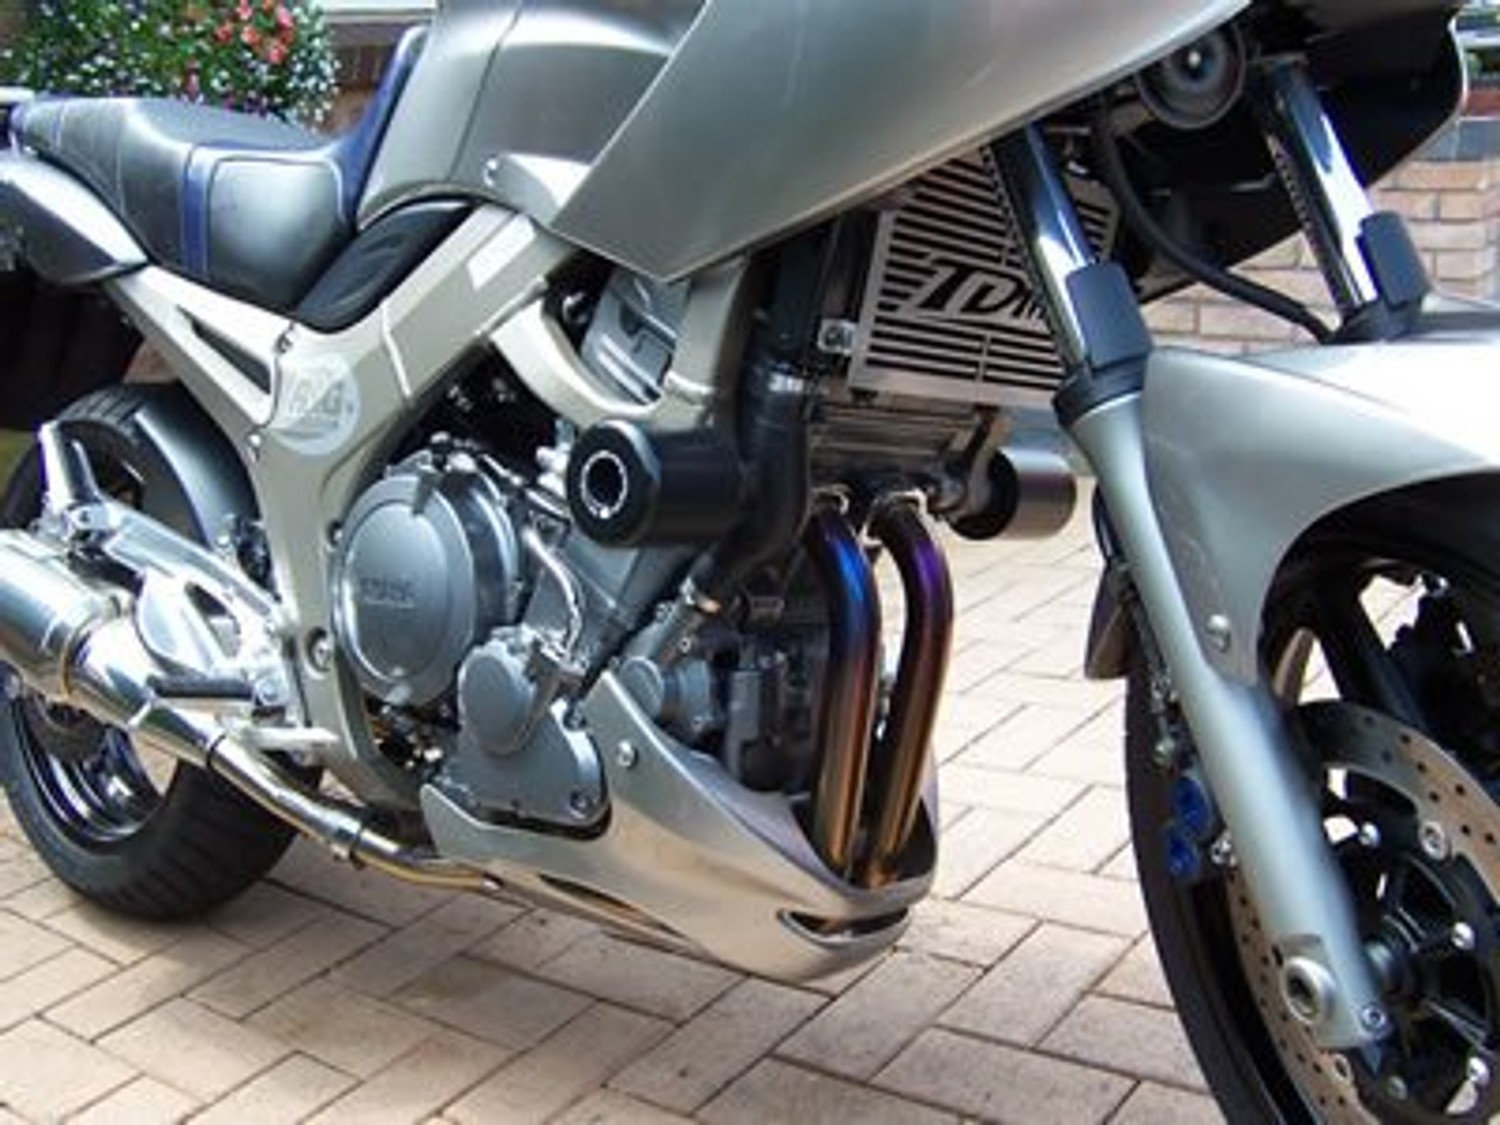 Pads protection moto fairing yamaha tdm 900 crash bar